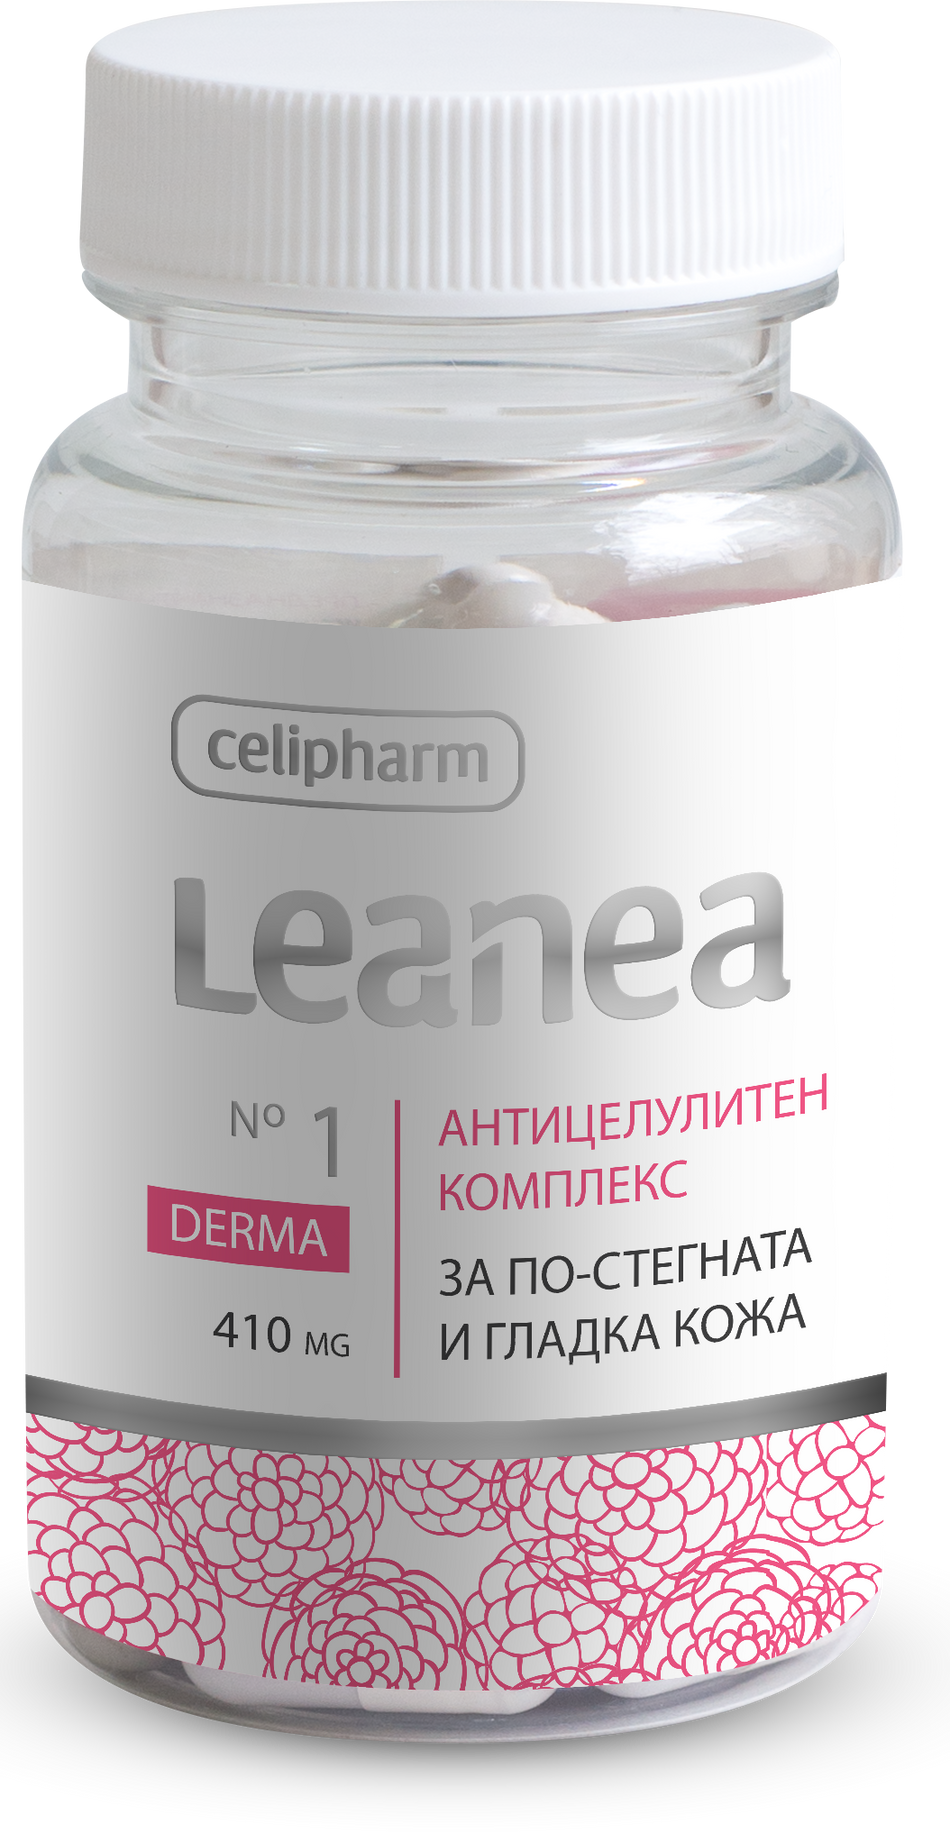 Leanea / Derma - BadiZdrav.BG